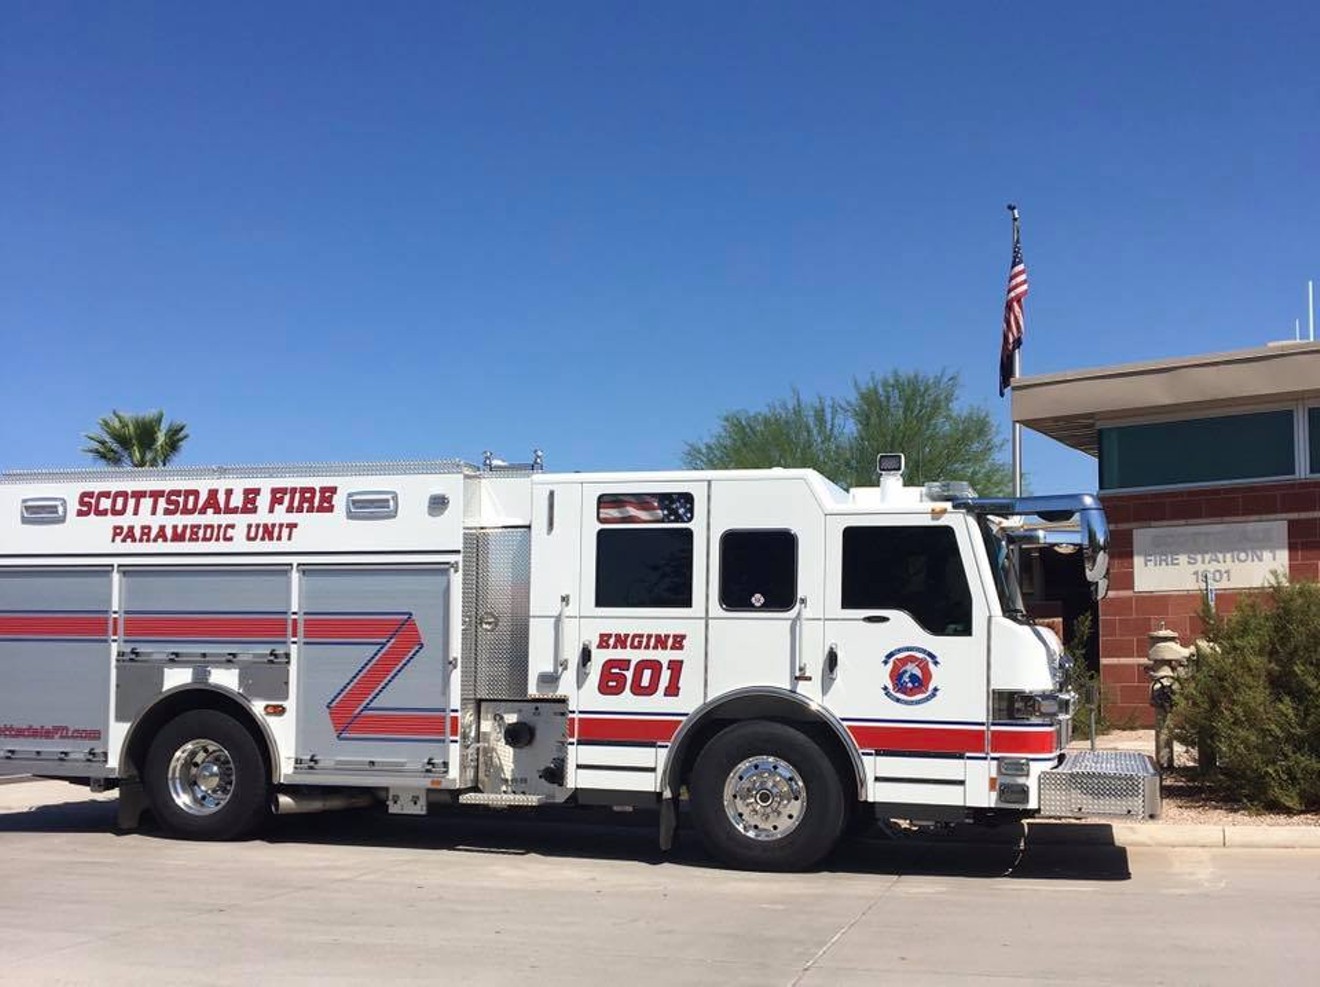 A Scottsdale Fire Department truck